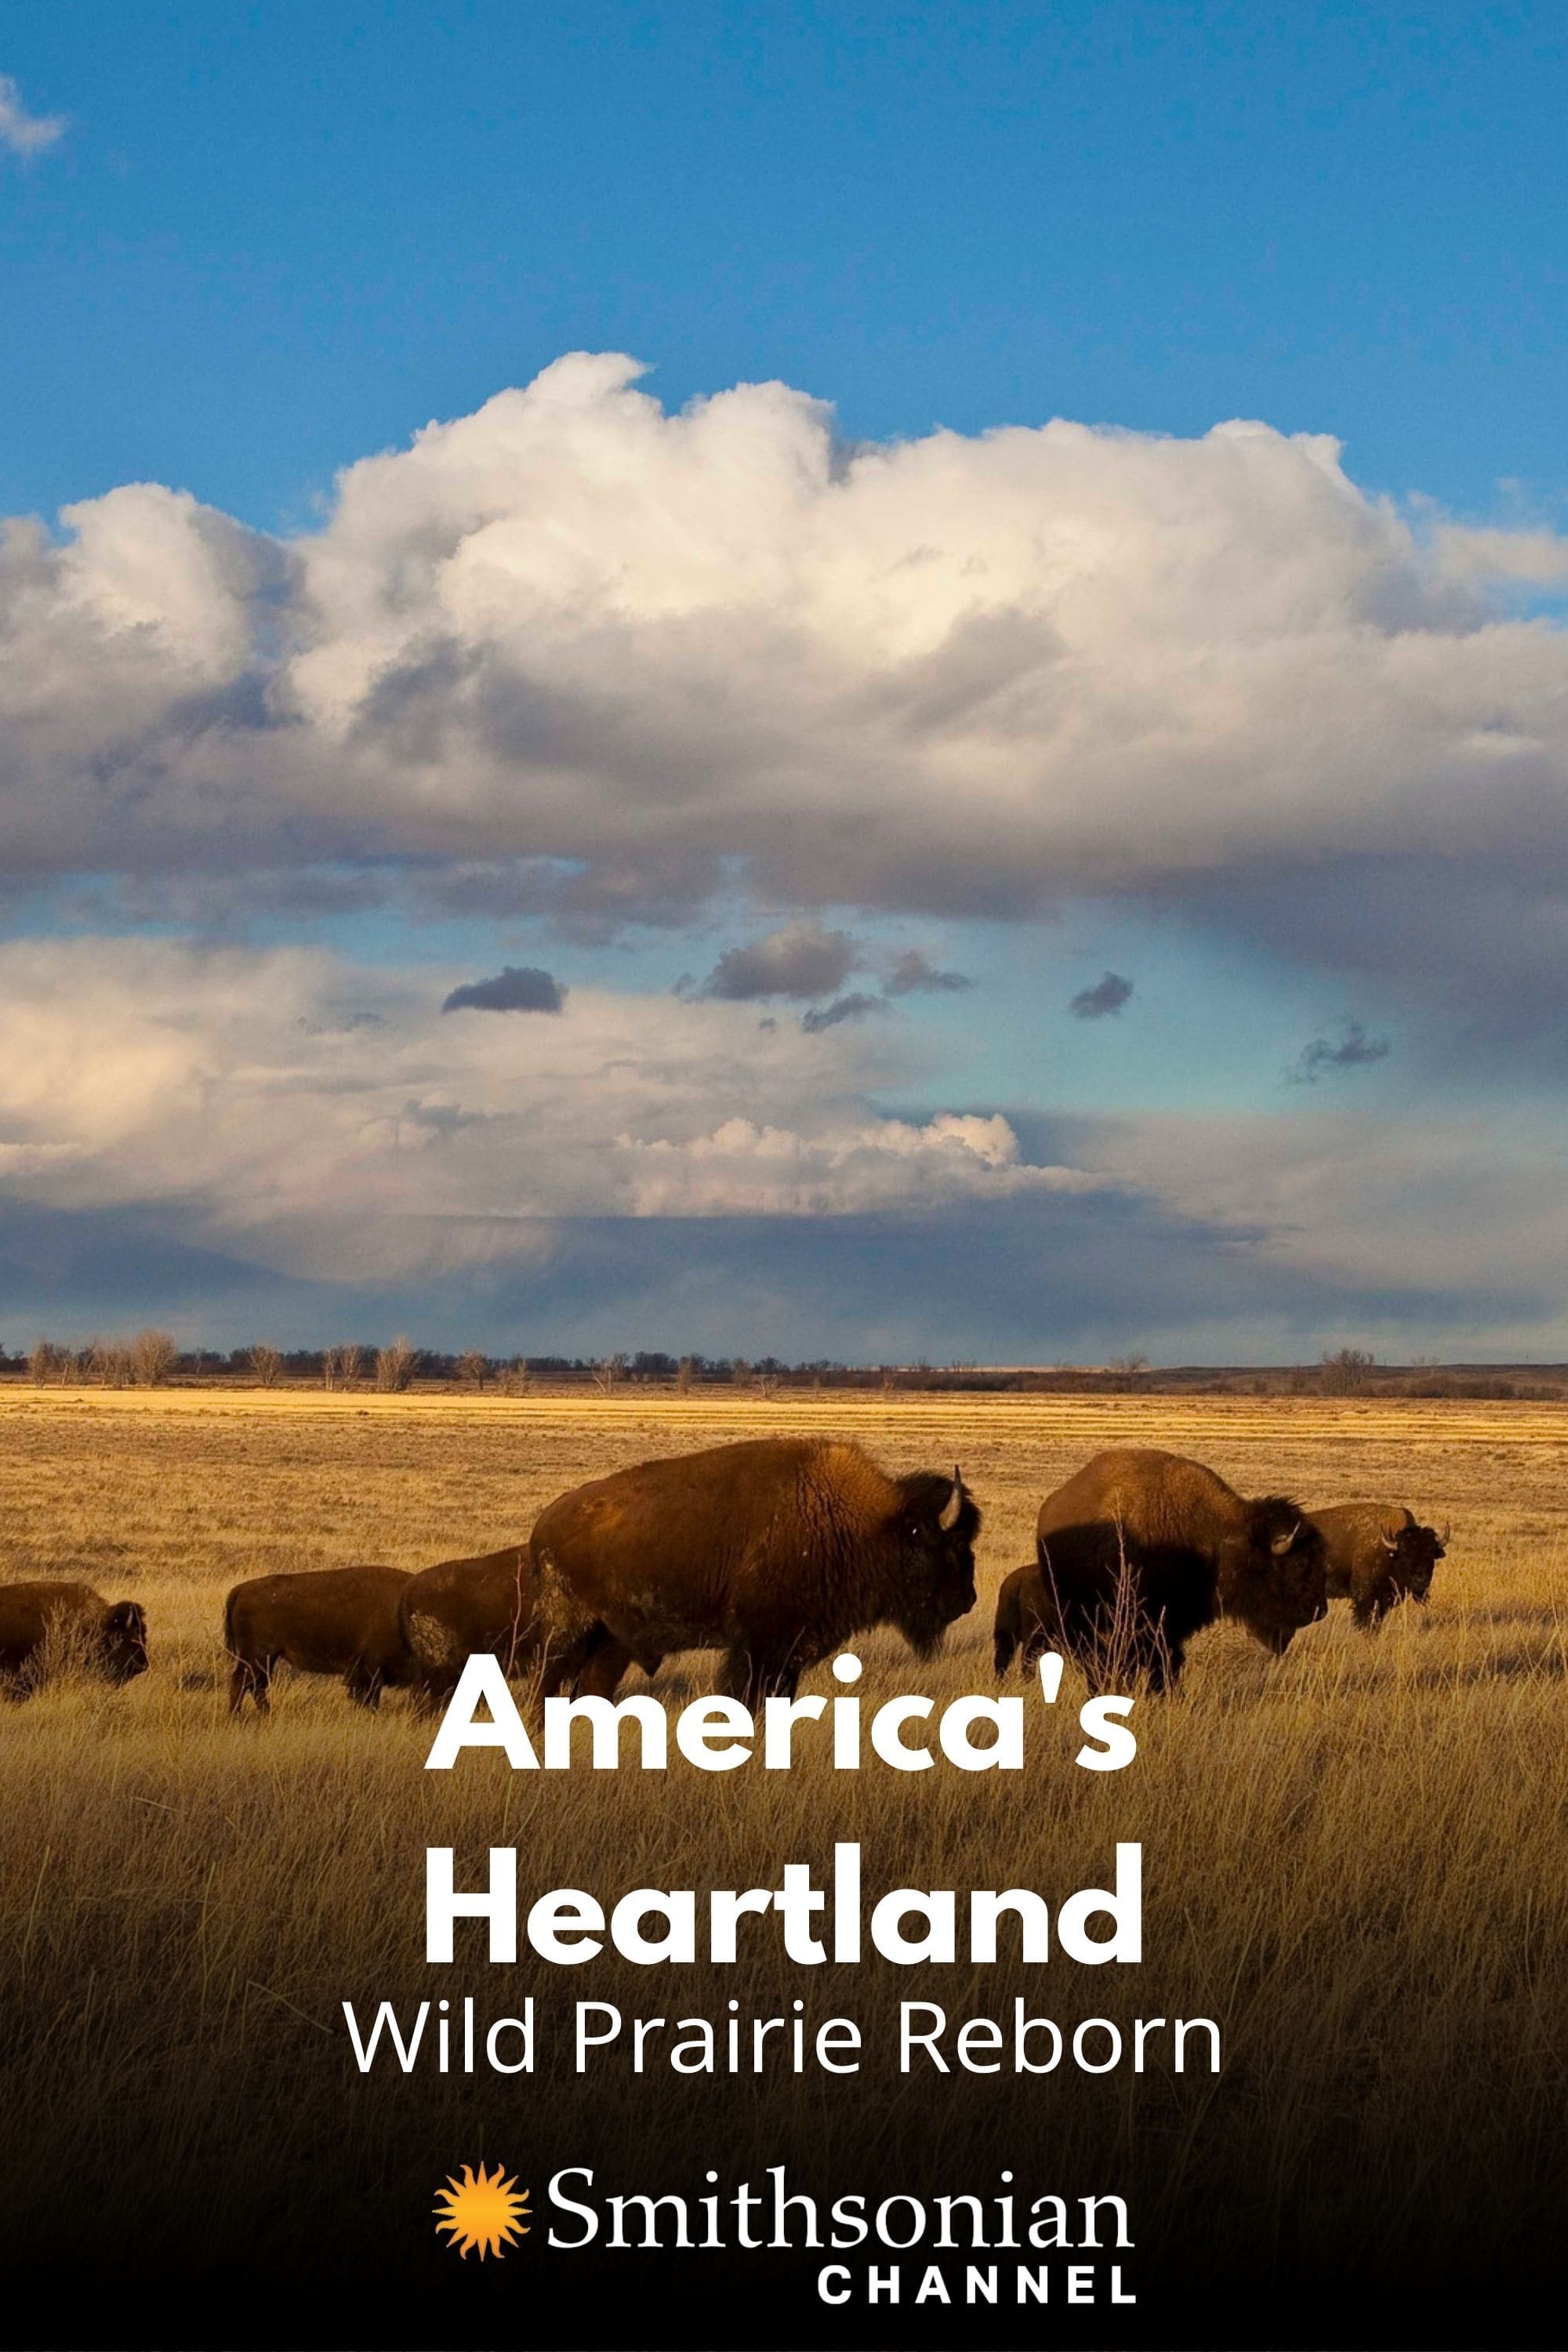 America's Heartland: Wild Prairie Reborn